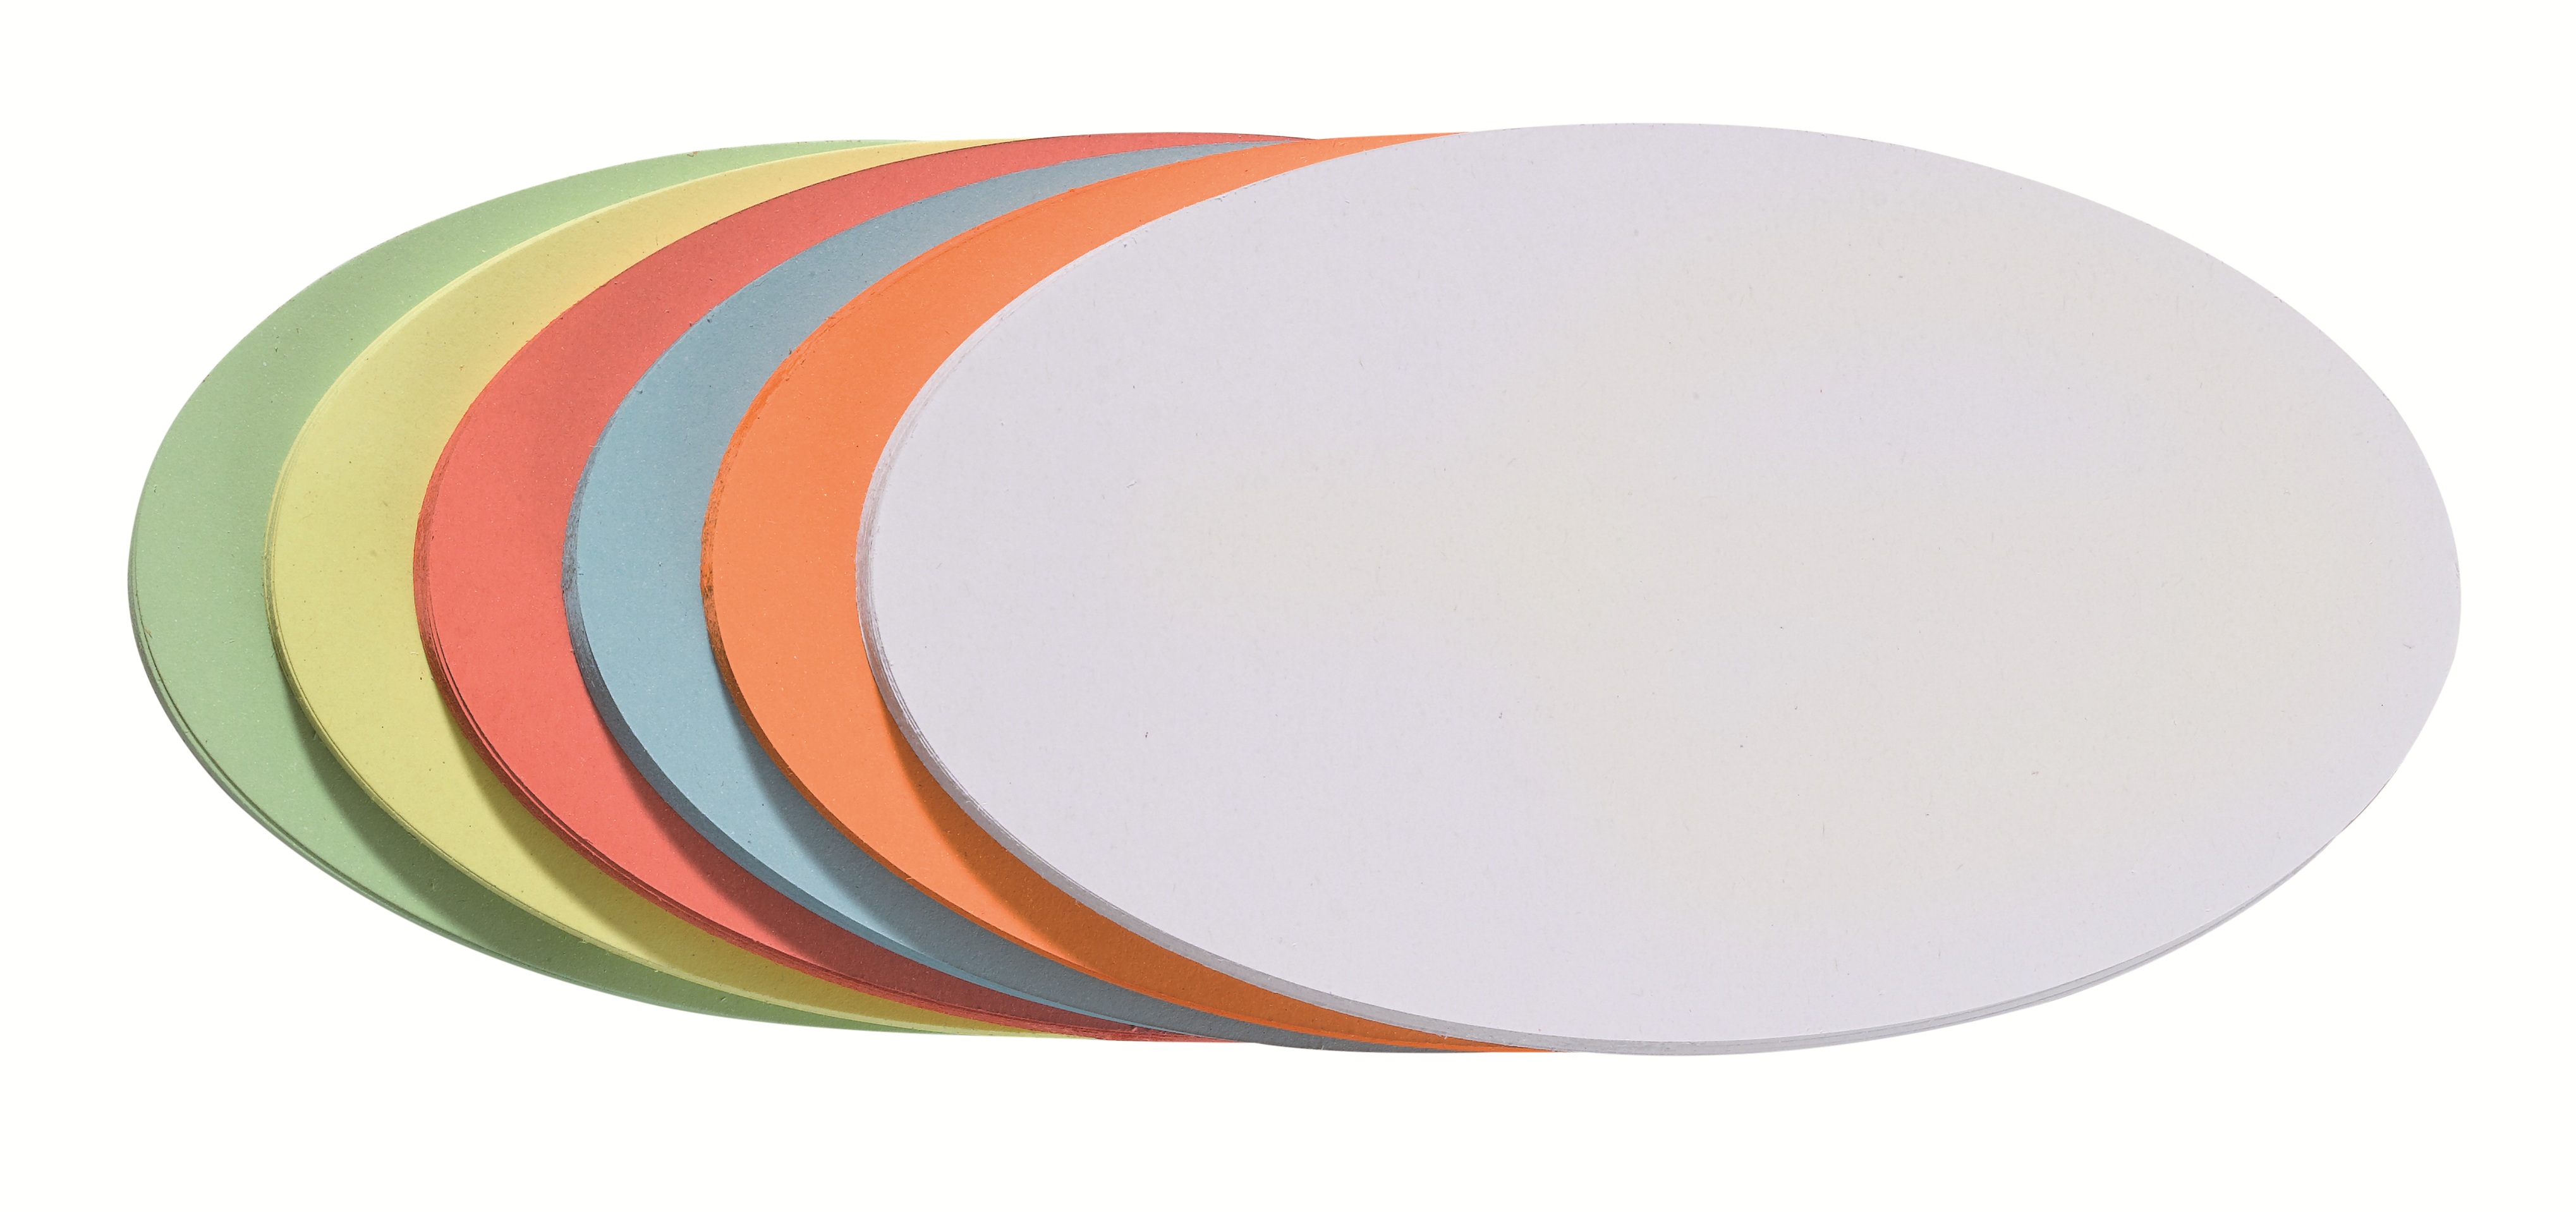 FRANKEN Moderationskarten Oval 19 x 11 cm 250 Stück mehrere Farben